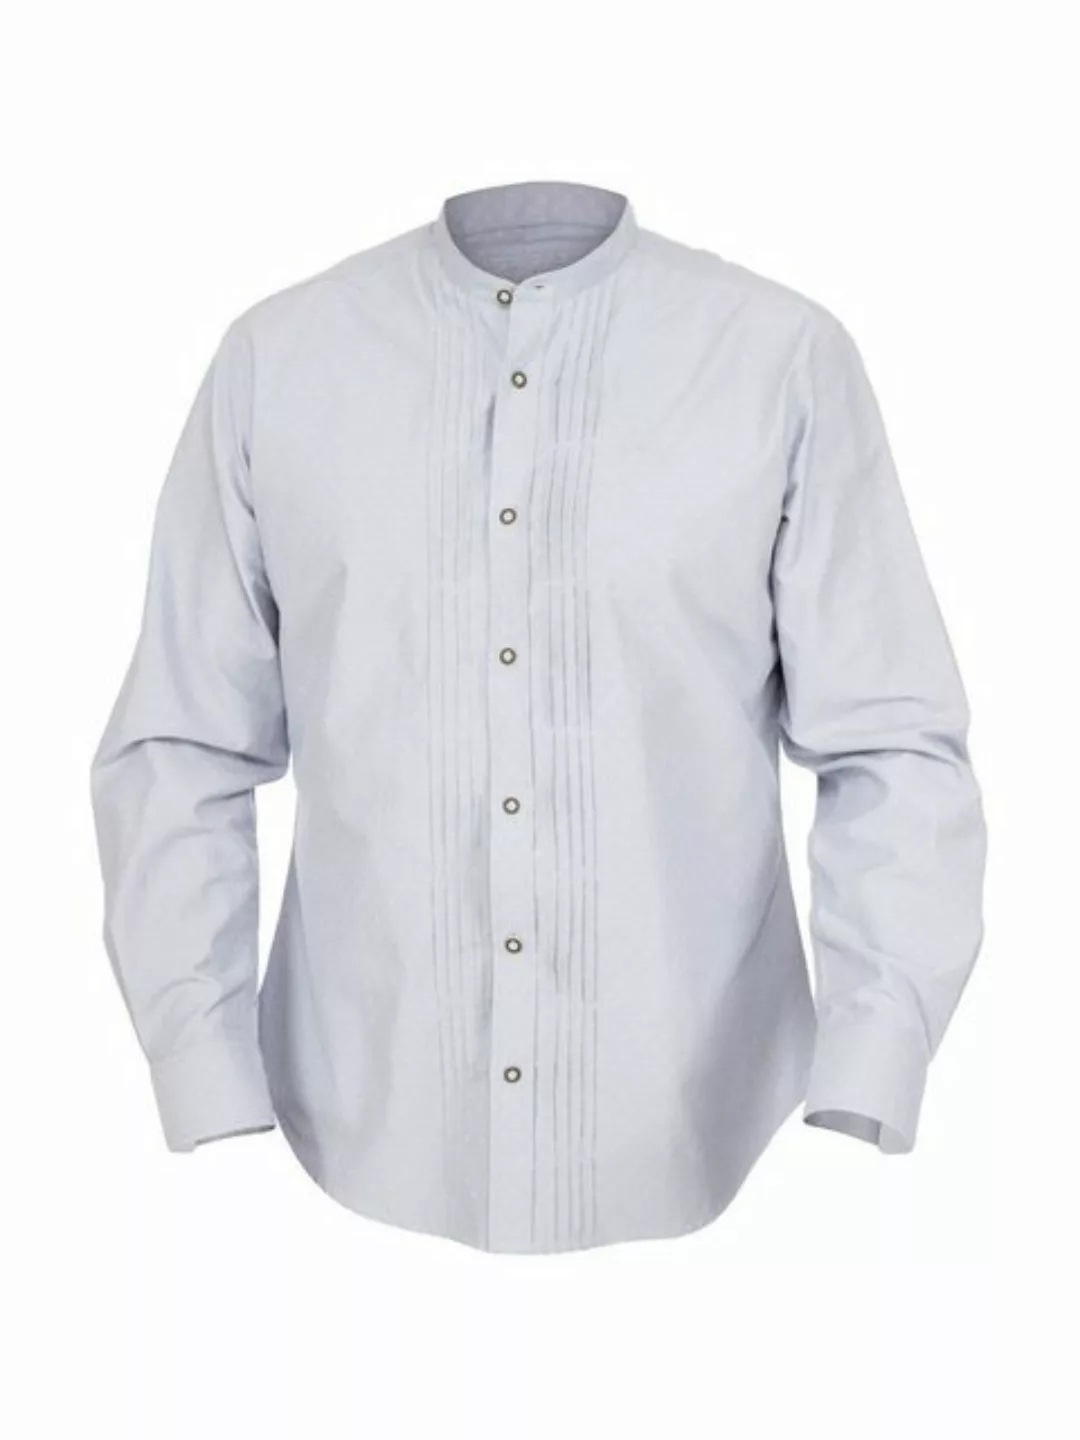 KRÜGER MADL & BUAM Trachtenhemd Hemd 911365-000-81 hellblau (Perfekt Fit) günstig online kaufen